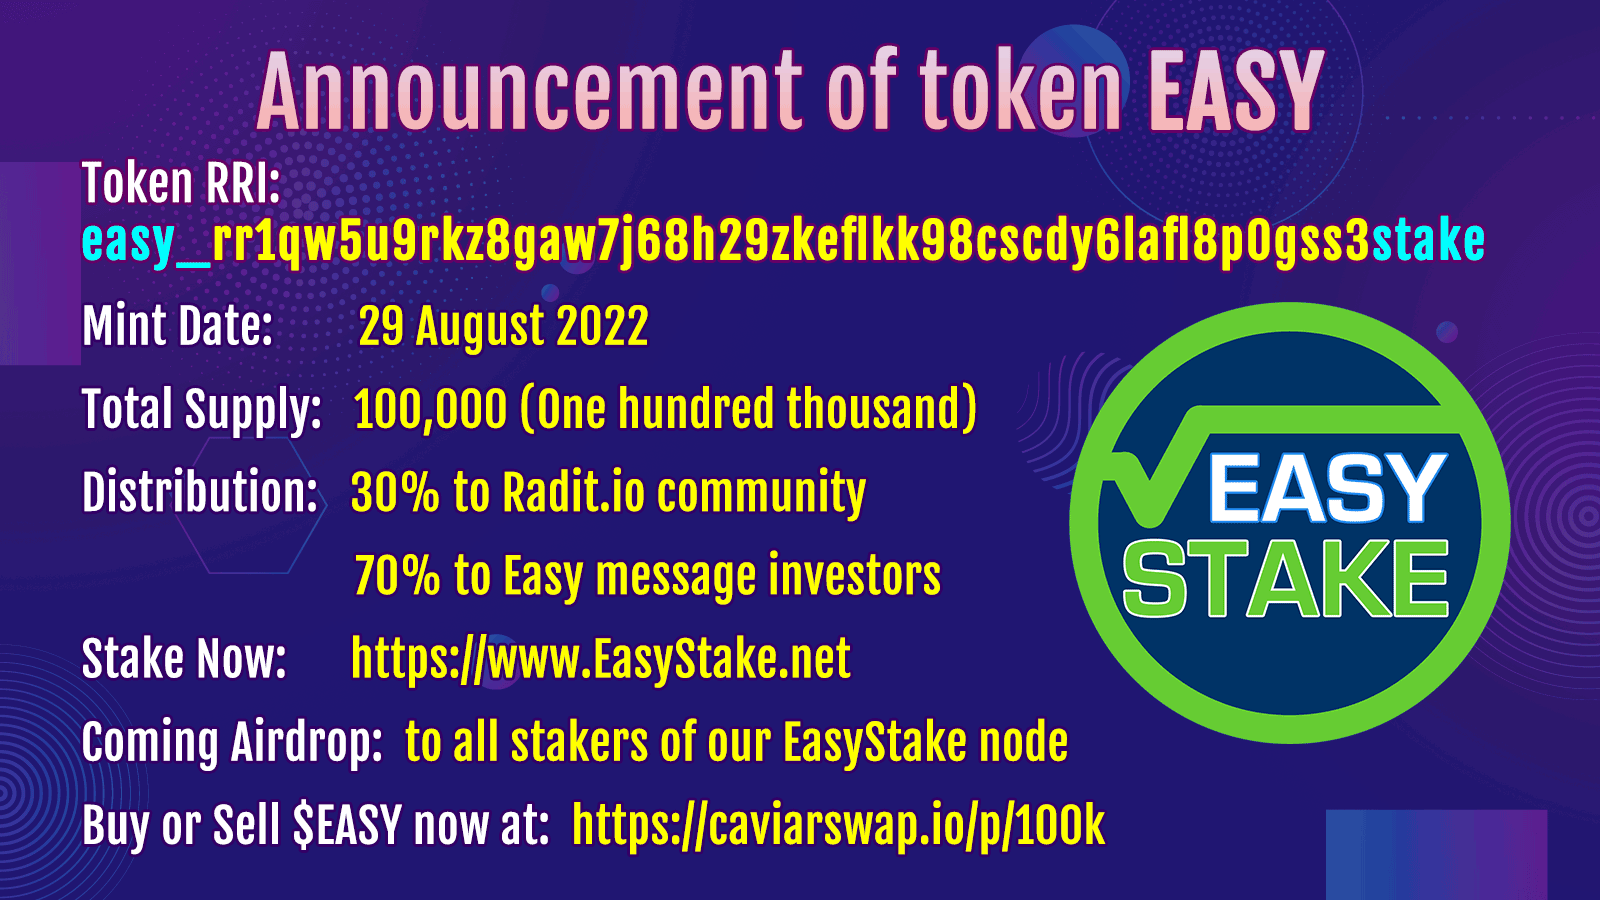 https://www.easystake.net/assets/social/easystake-announcement.png